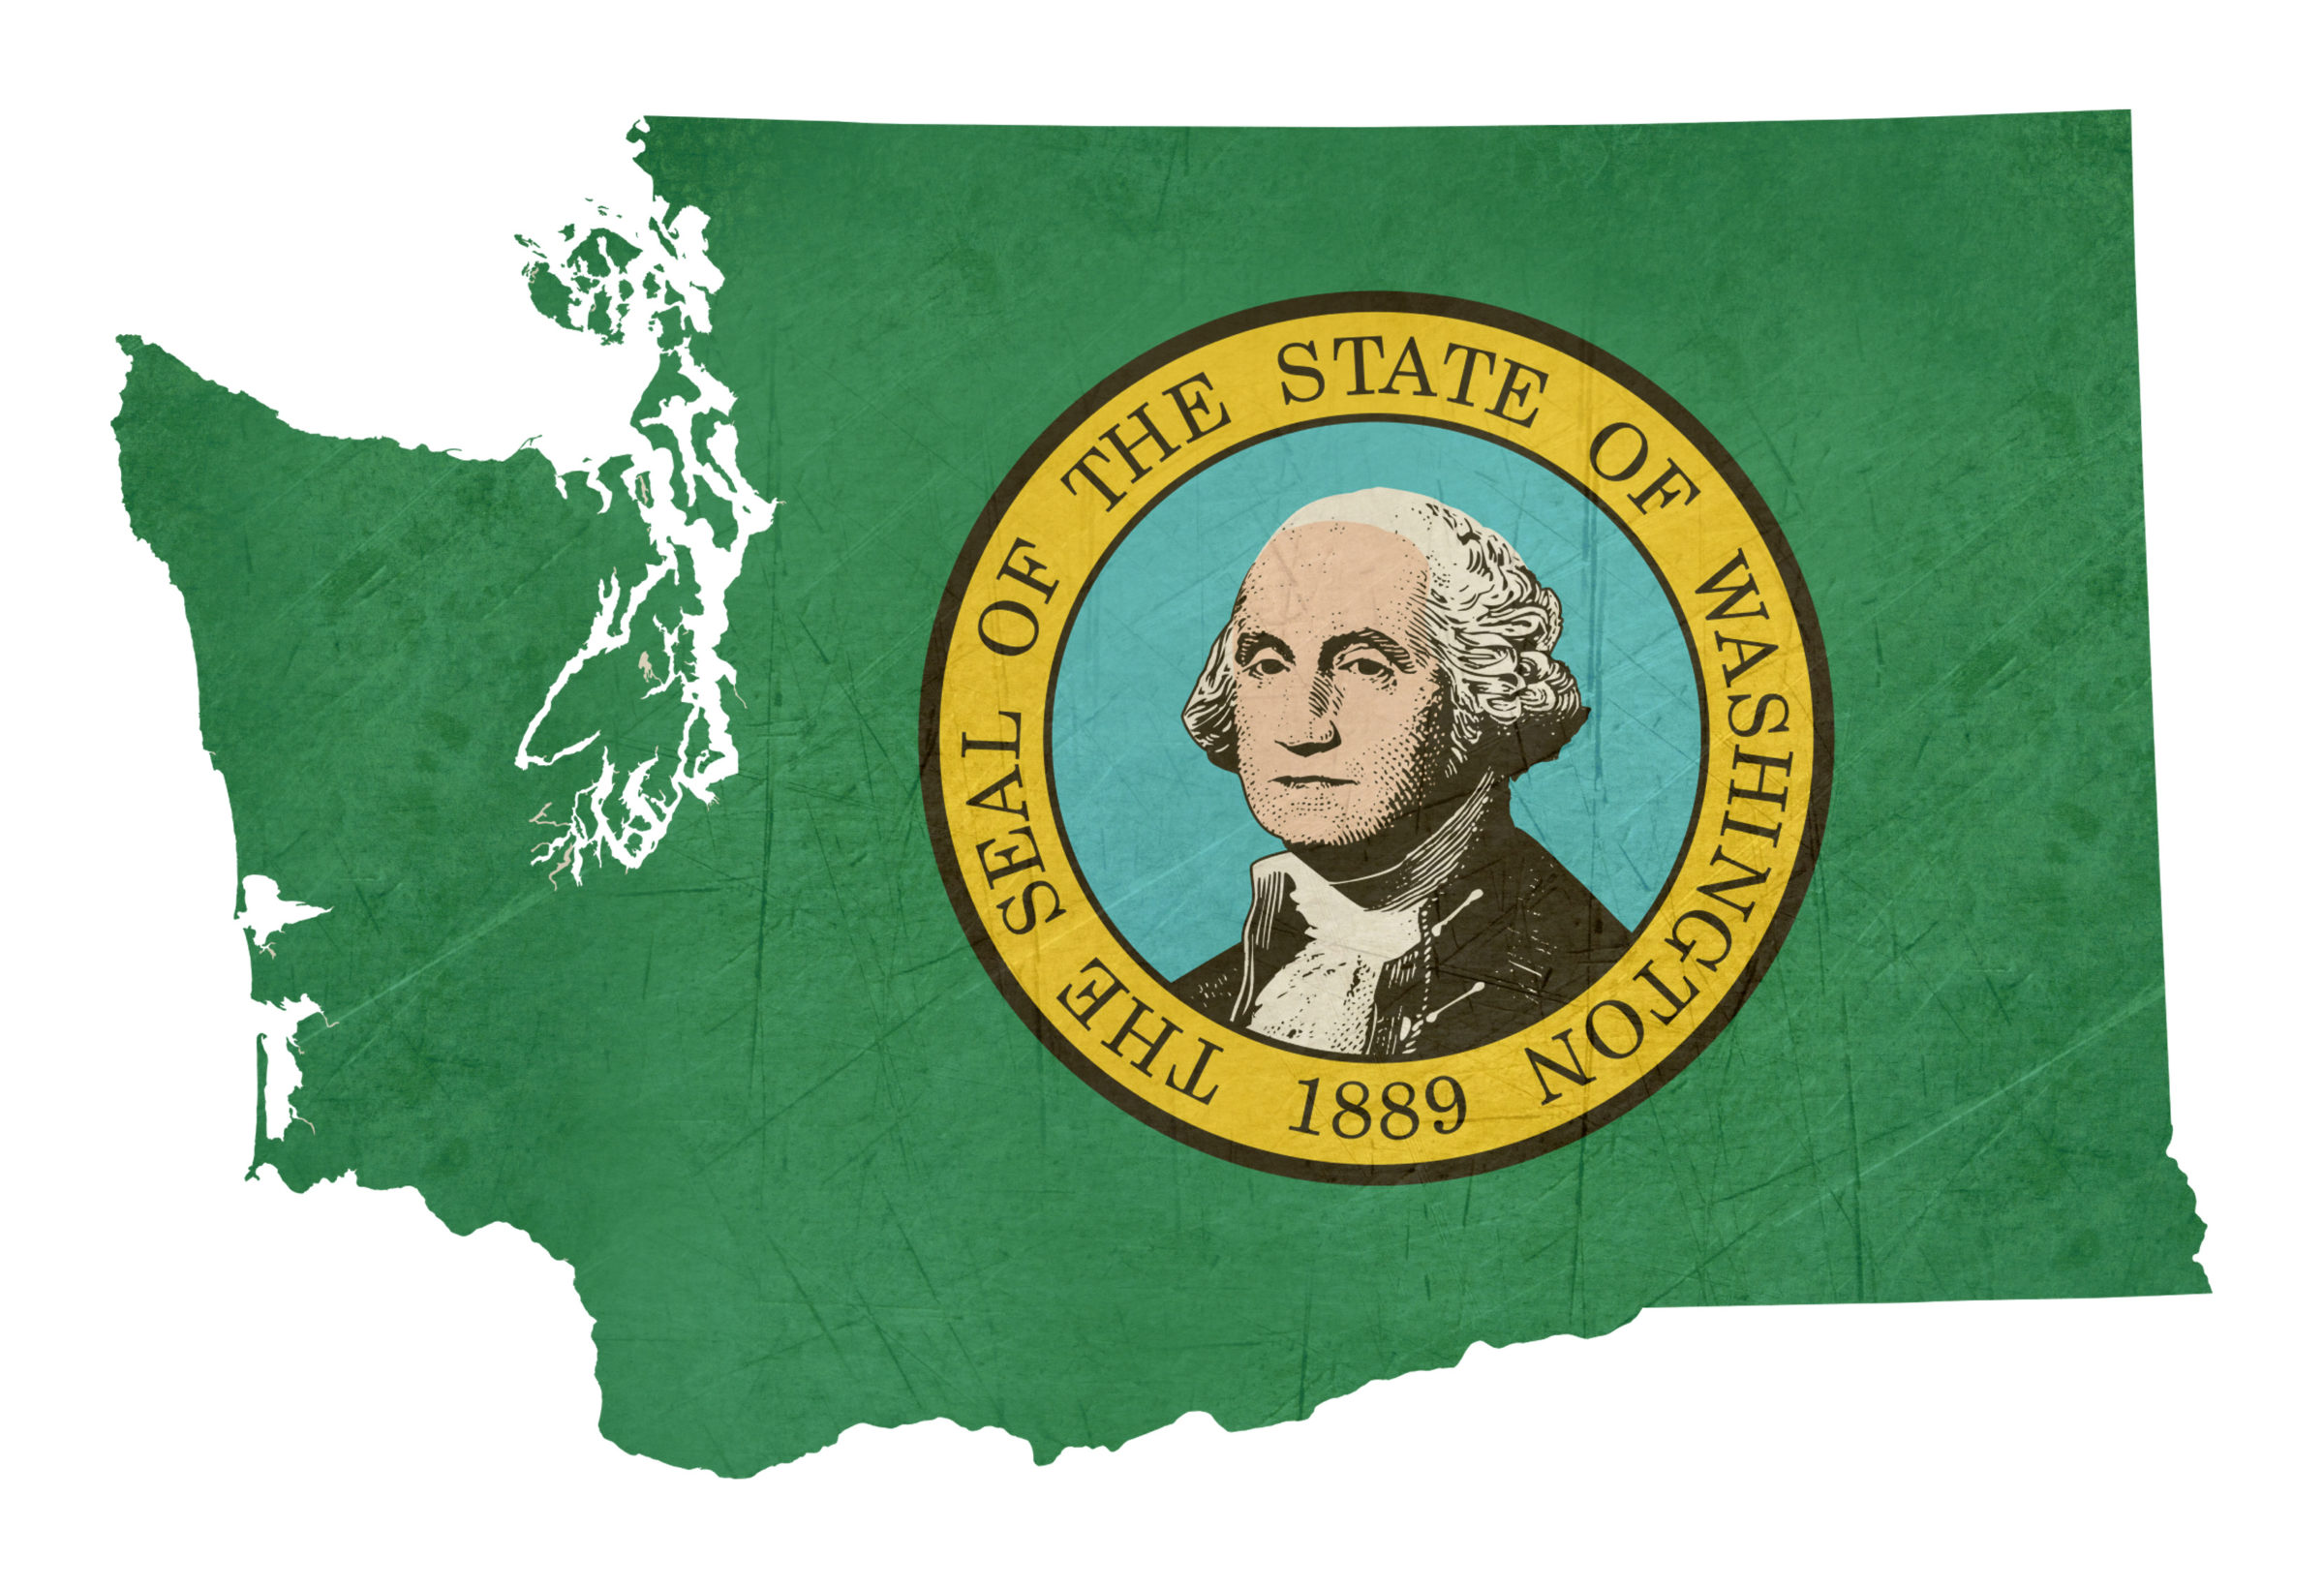 Grunge state of Washington flag map isolated on a white background, U.S.A.